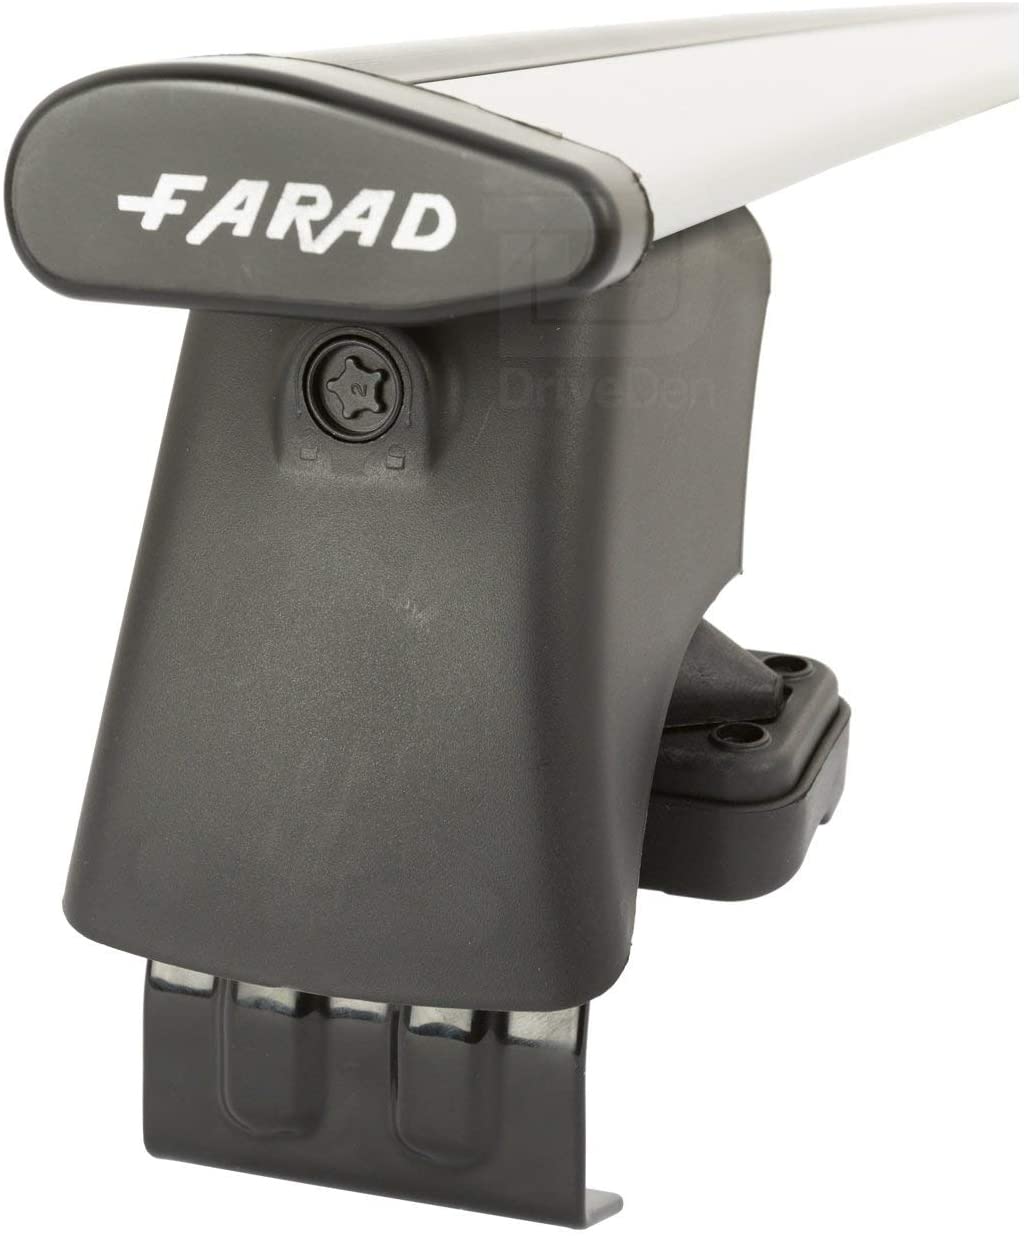 FARAD-Kit H2 per barre portatutto - Skoda Rapid / Rapid Spaceback 2013> (senza corrimano)